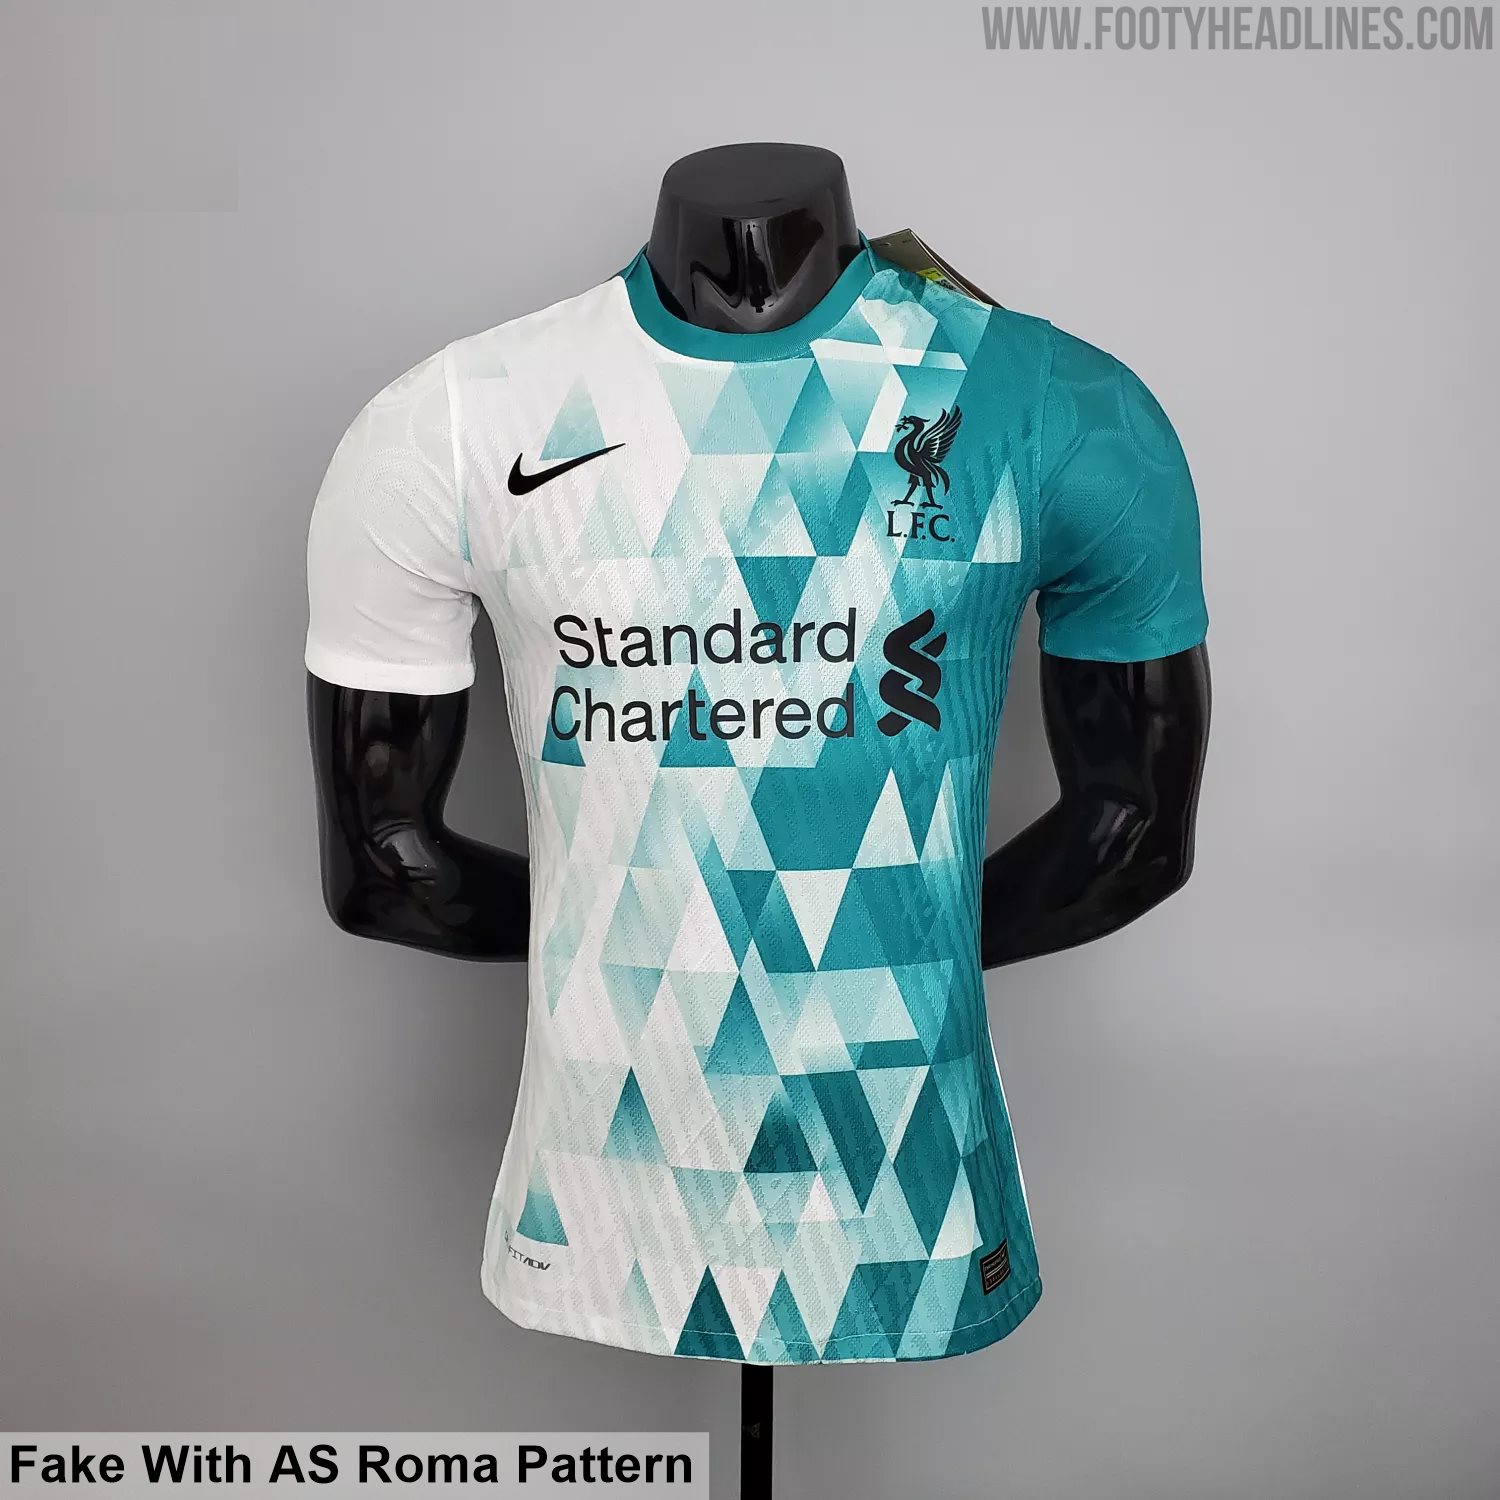 Never-Released Special Nike Liverpool 21-22 Kit Leaked? - Footy Headlines